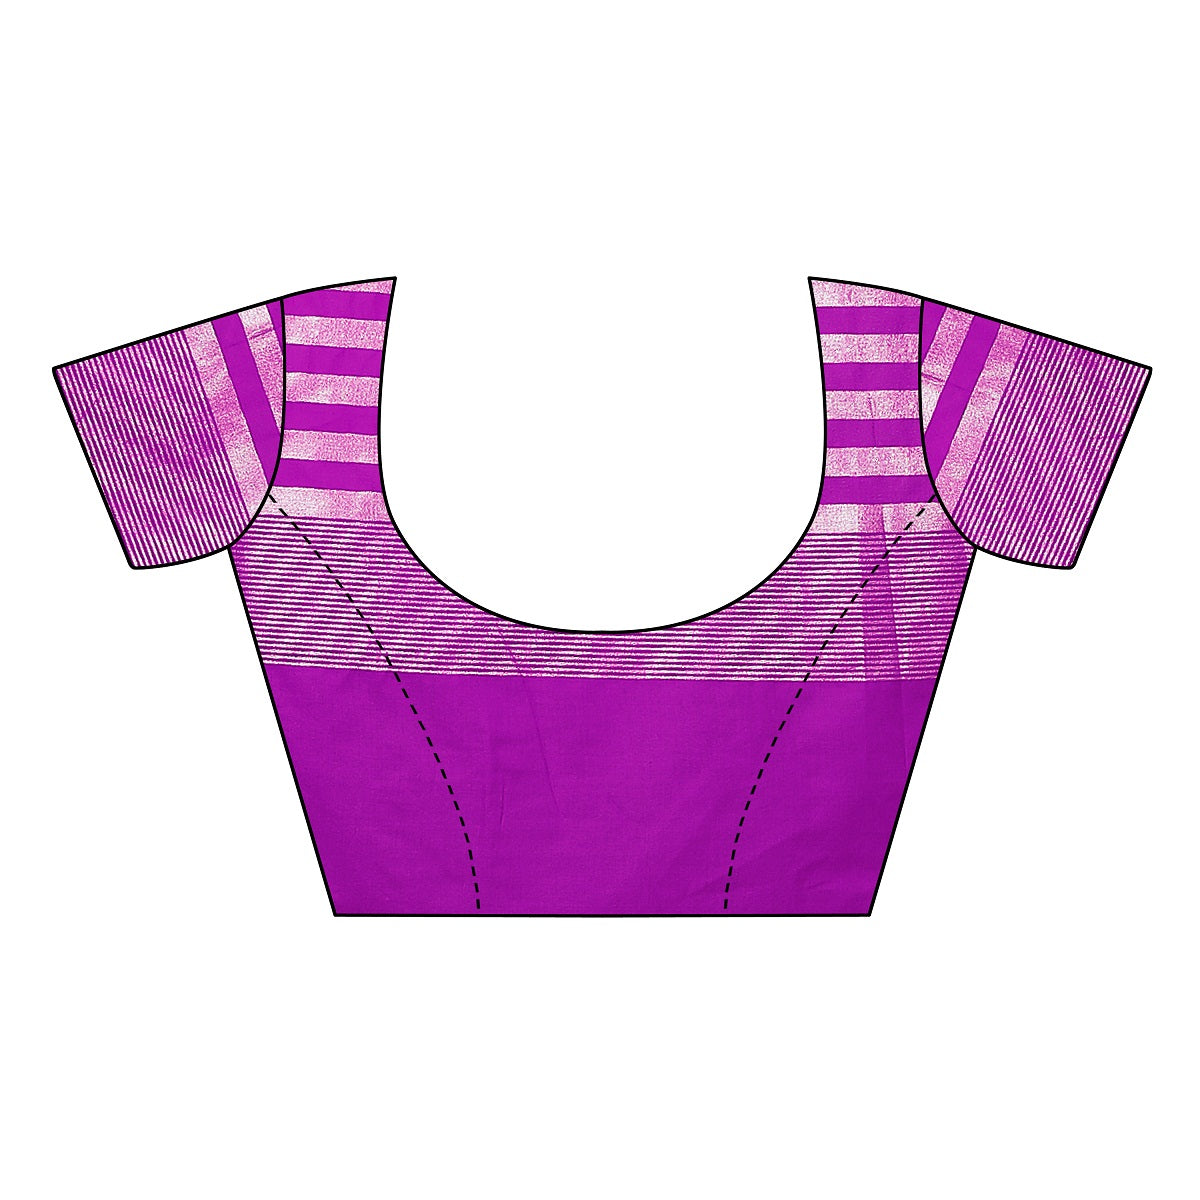 Women's Purple Cotton Silk Weaving Saree - Vamika